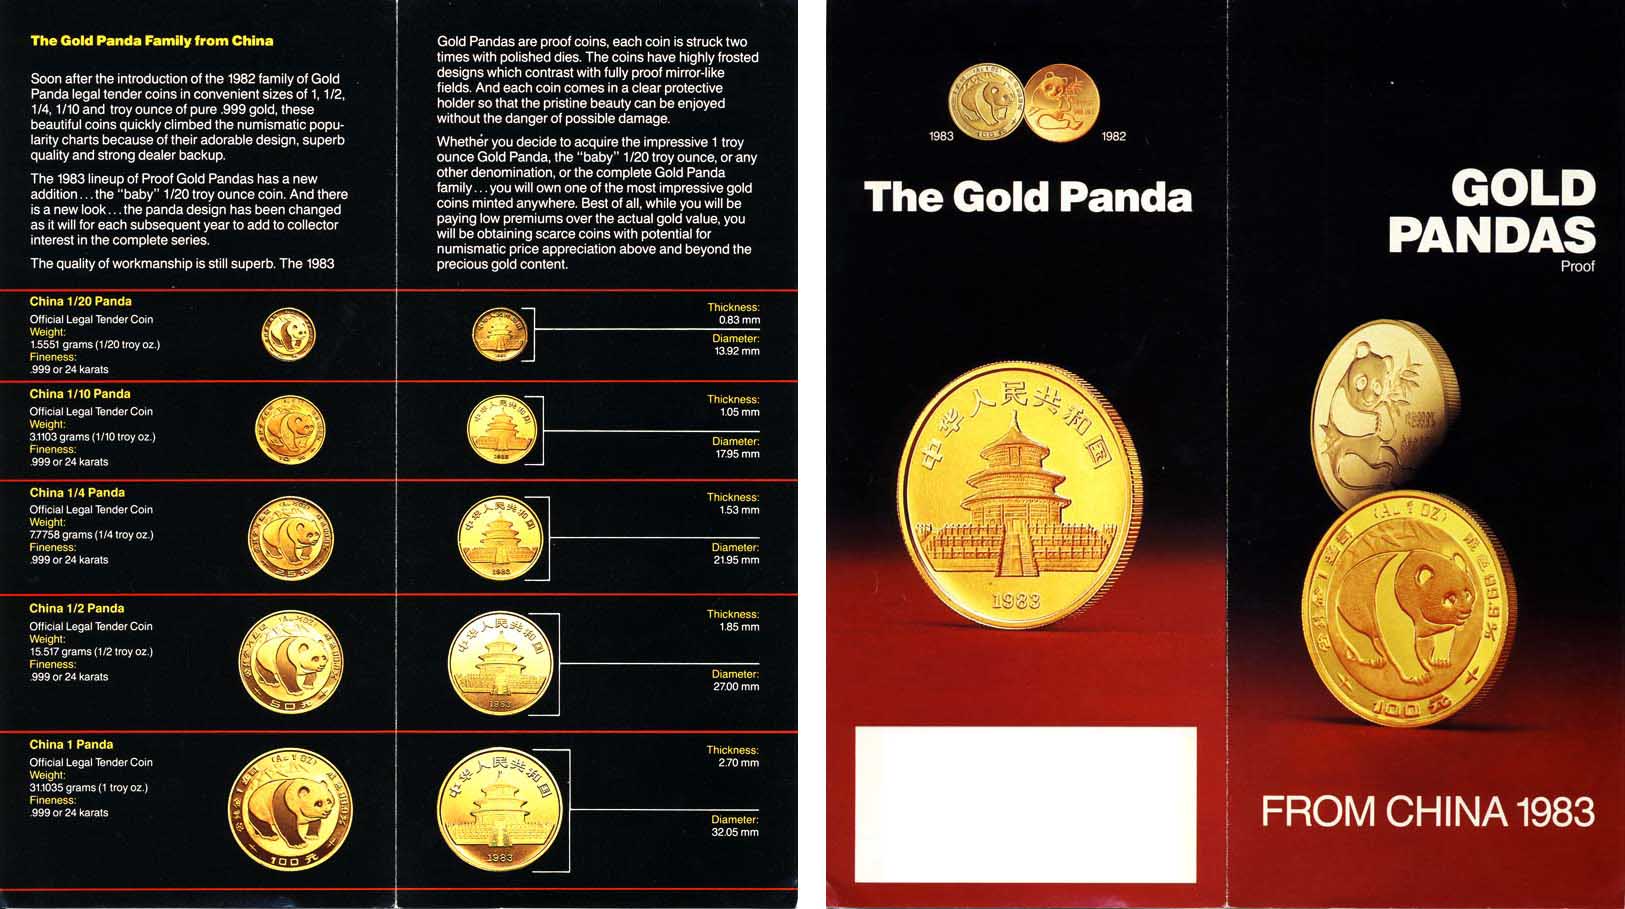 1983 Gold Panda brochure